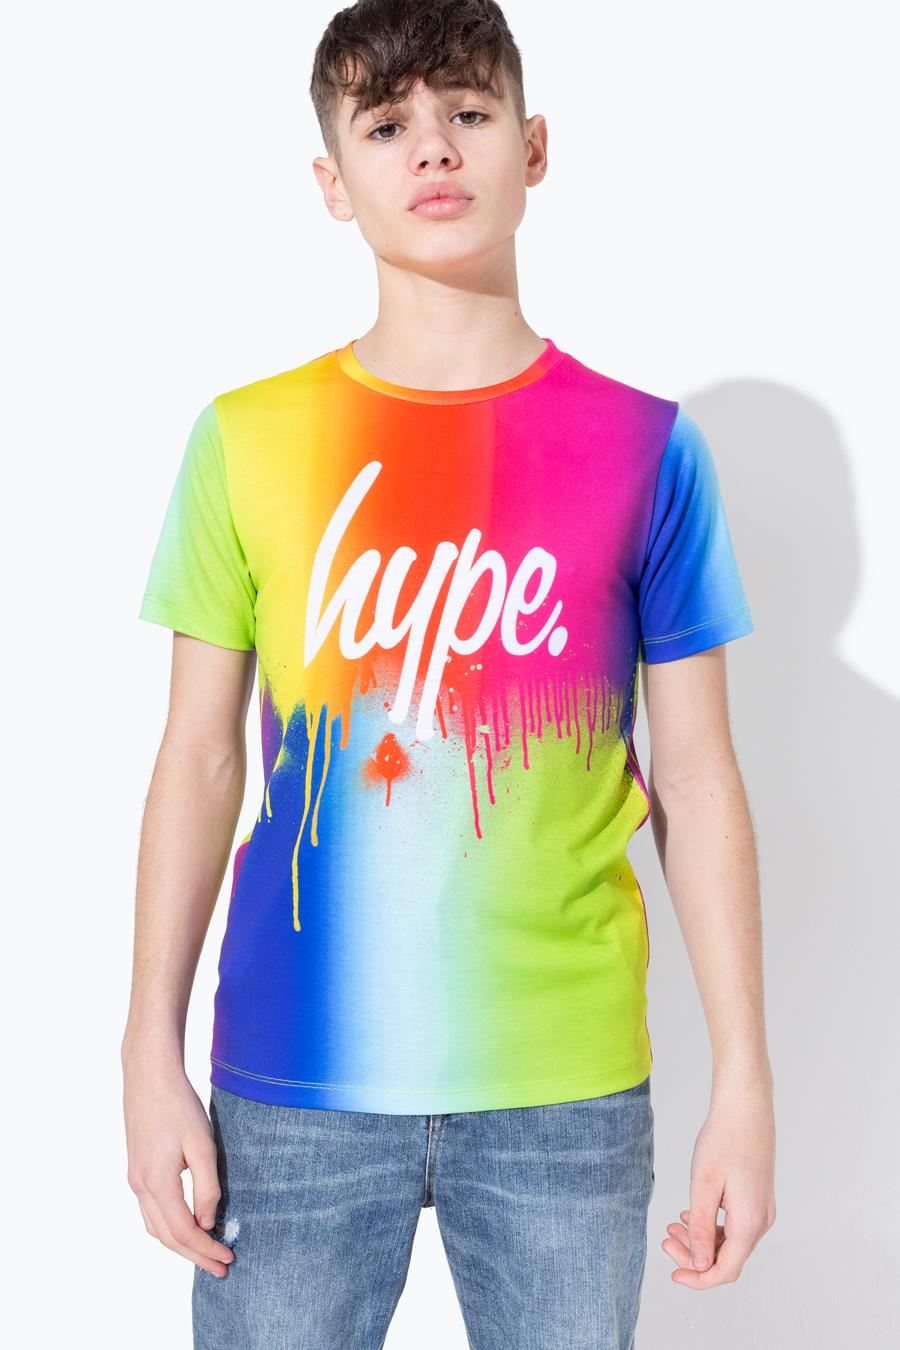 Hype, Rainbow Drips Kids T-Shirt